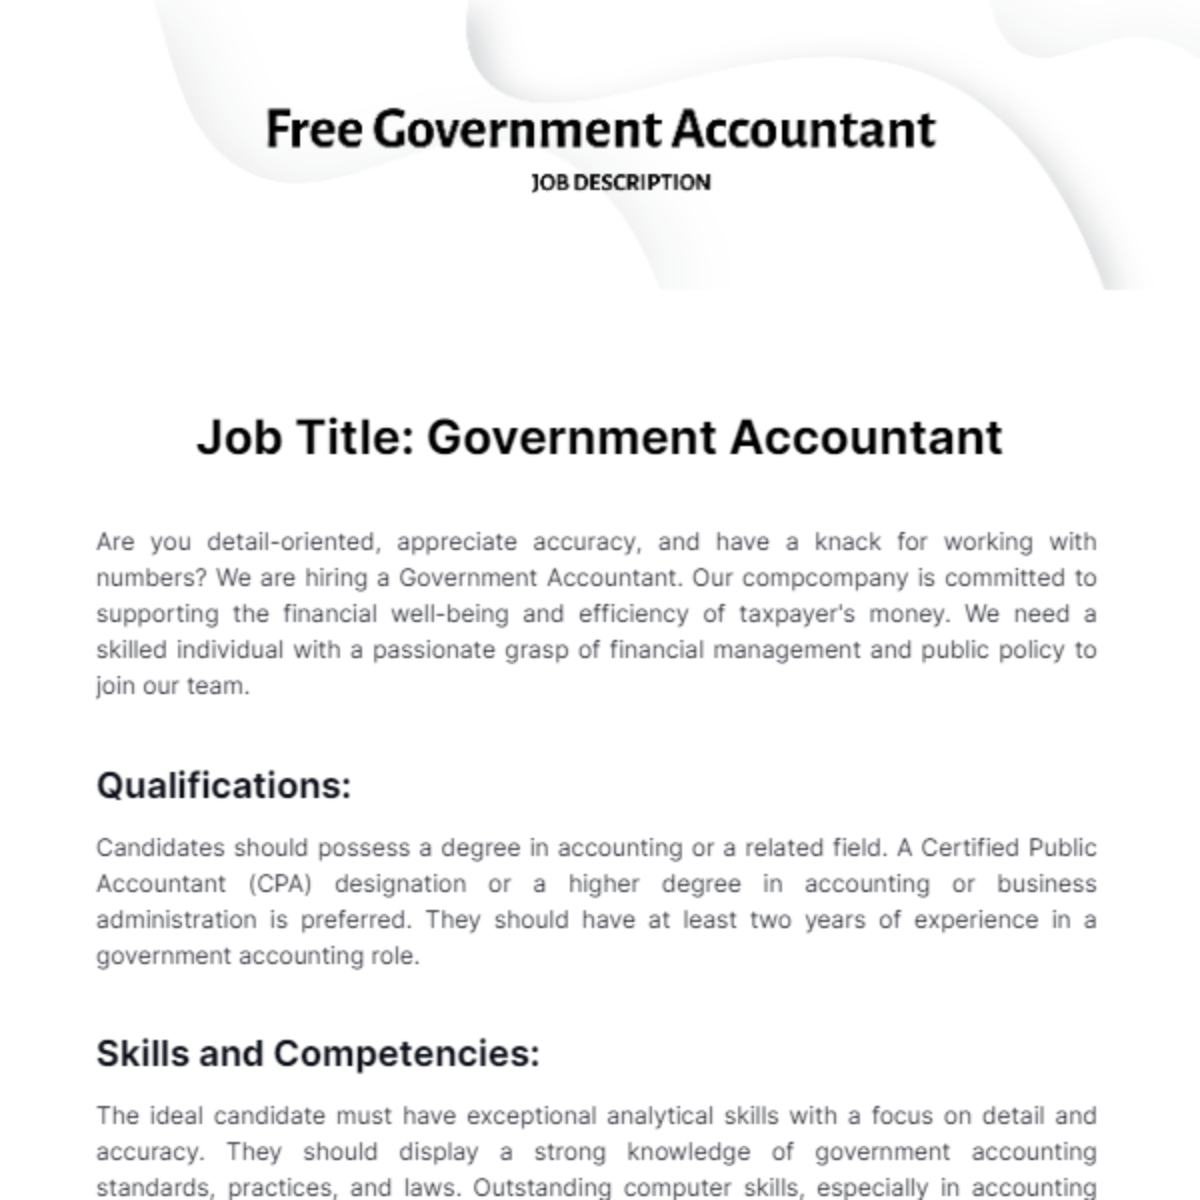 Free Government Accountant Job Description Template